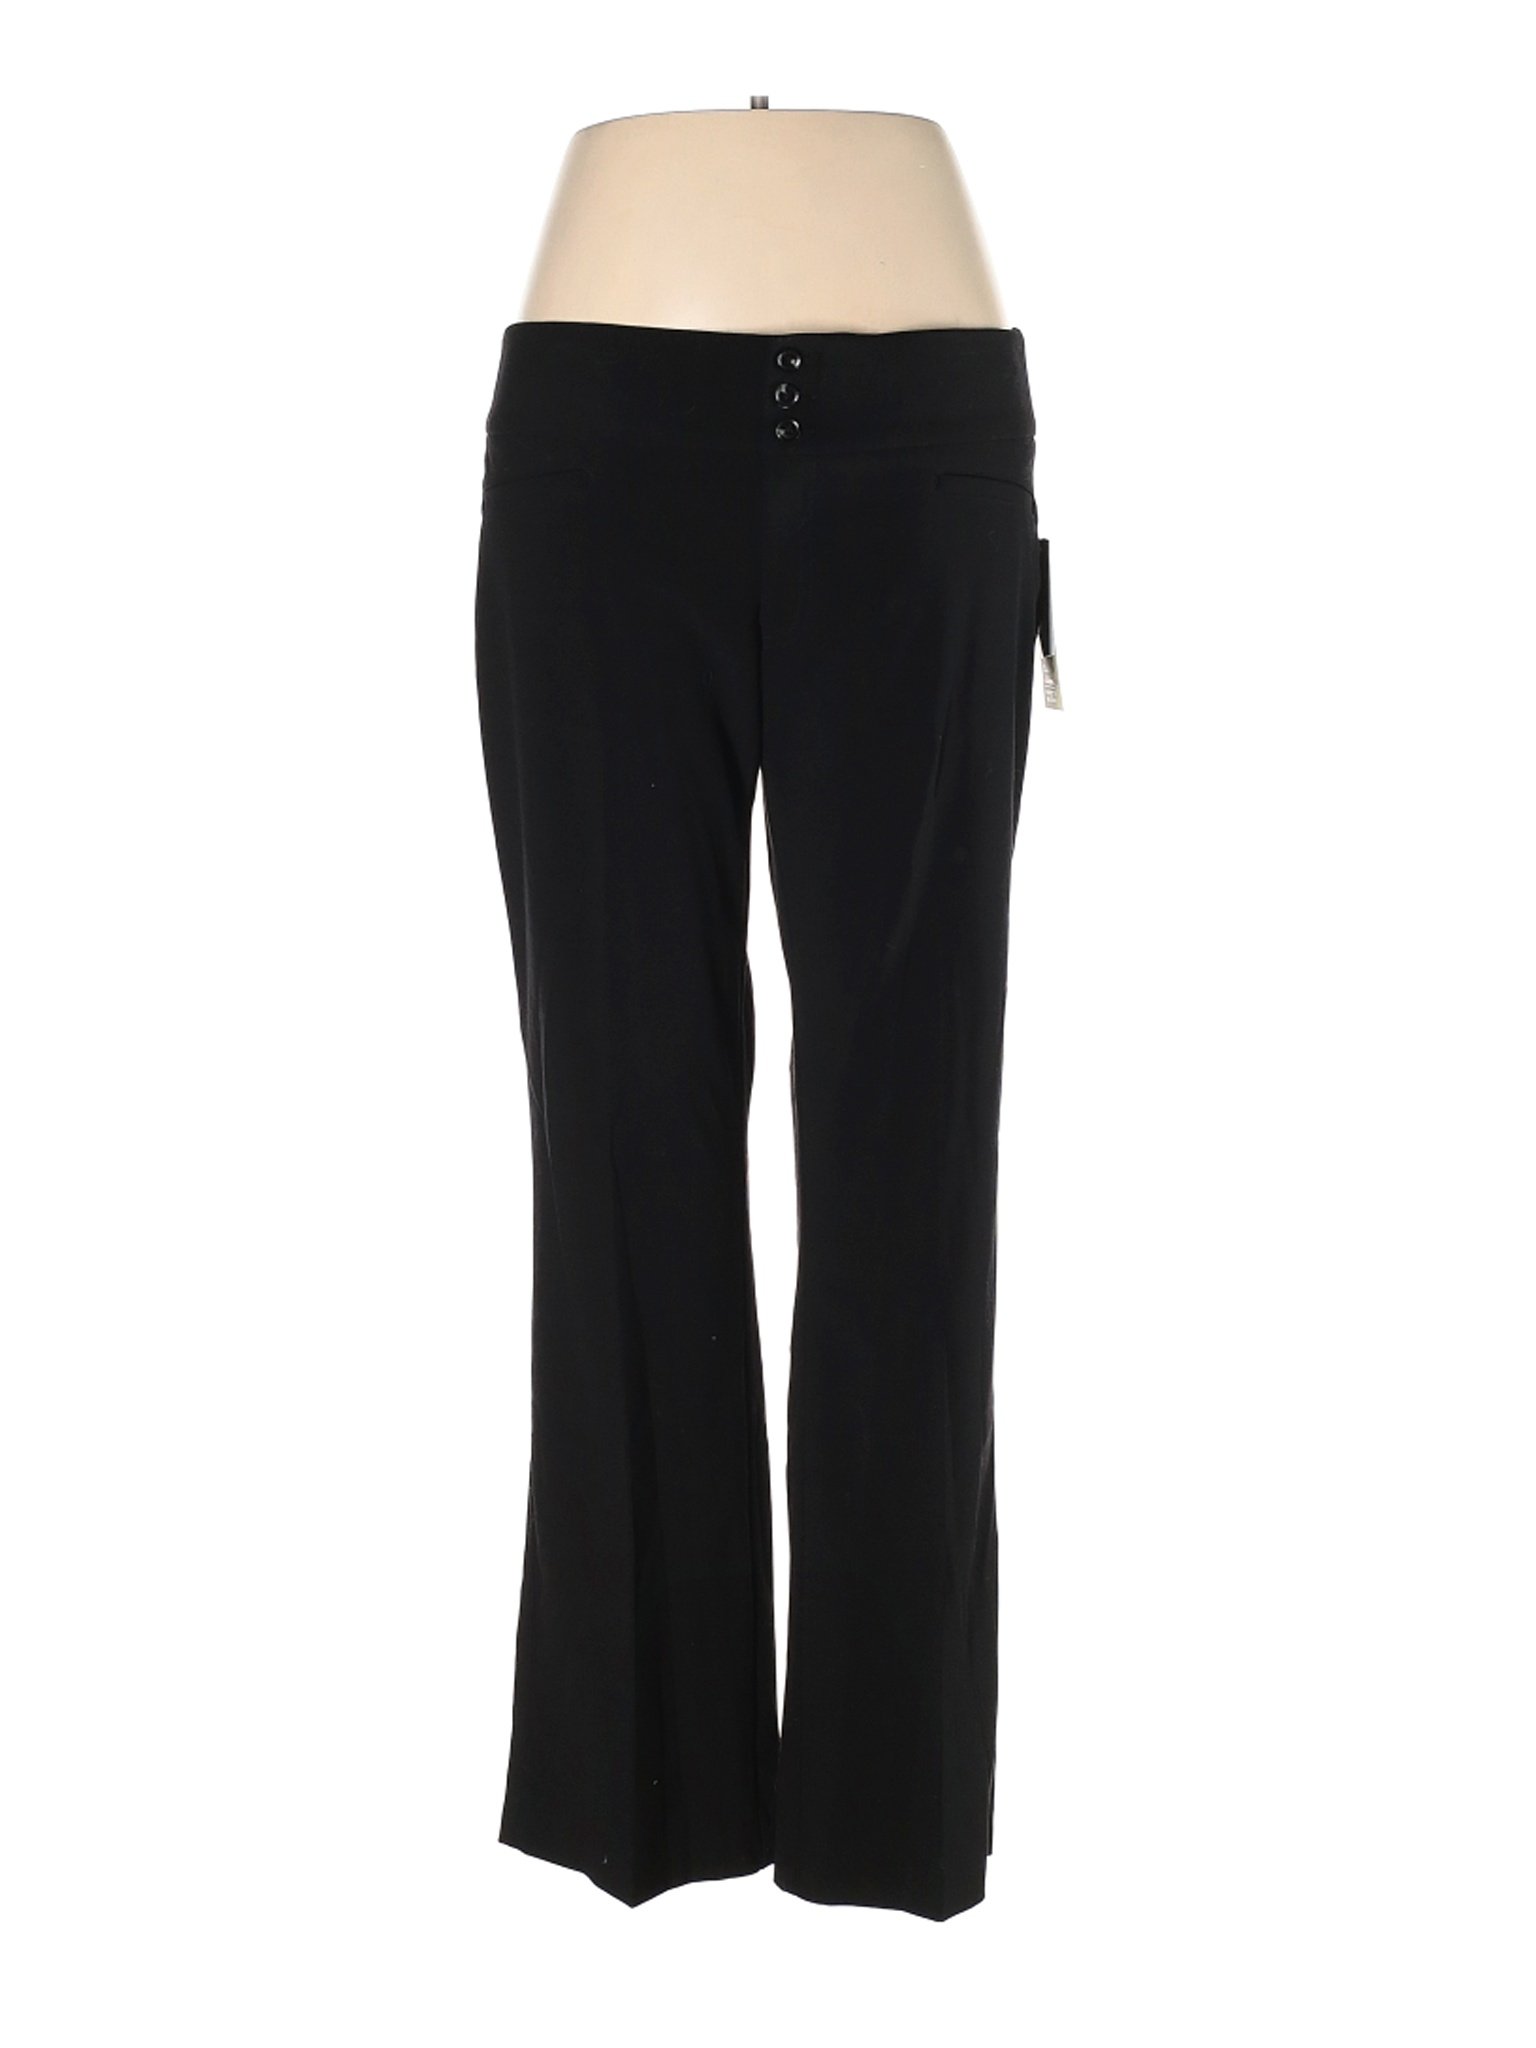 NWT Hollywould Women Black Dress Pants 15 | eBay